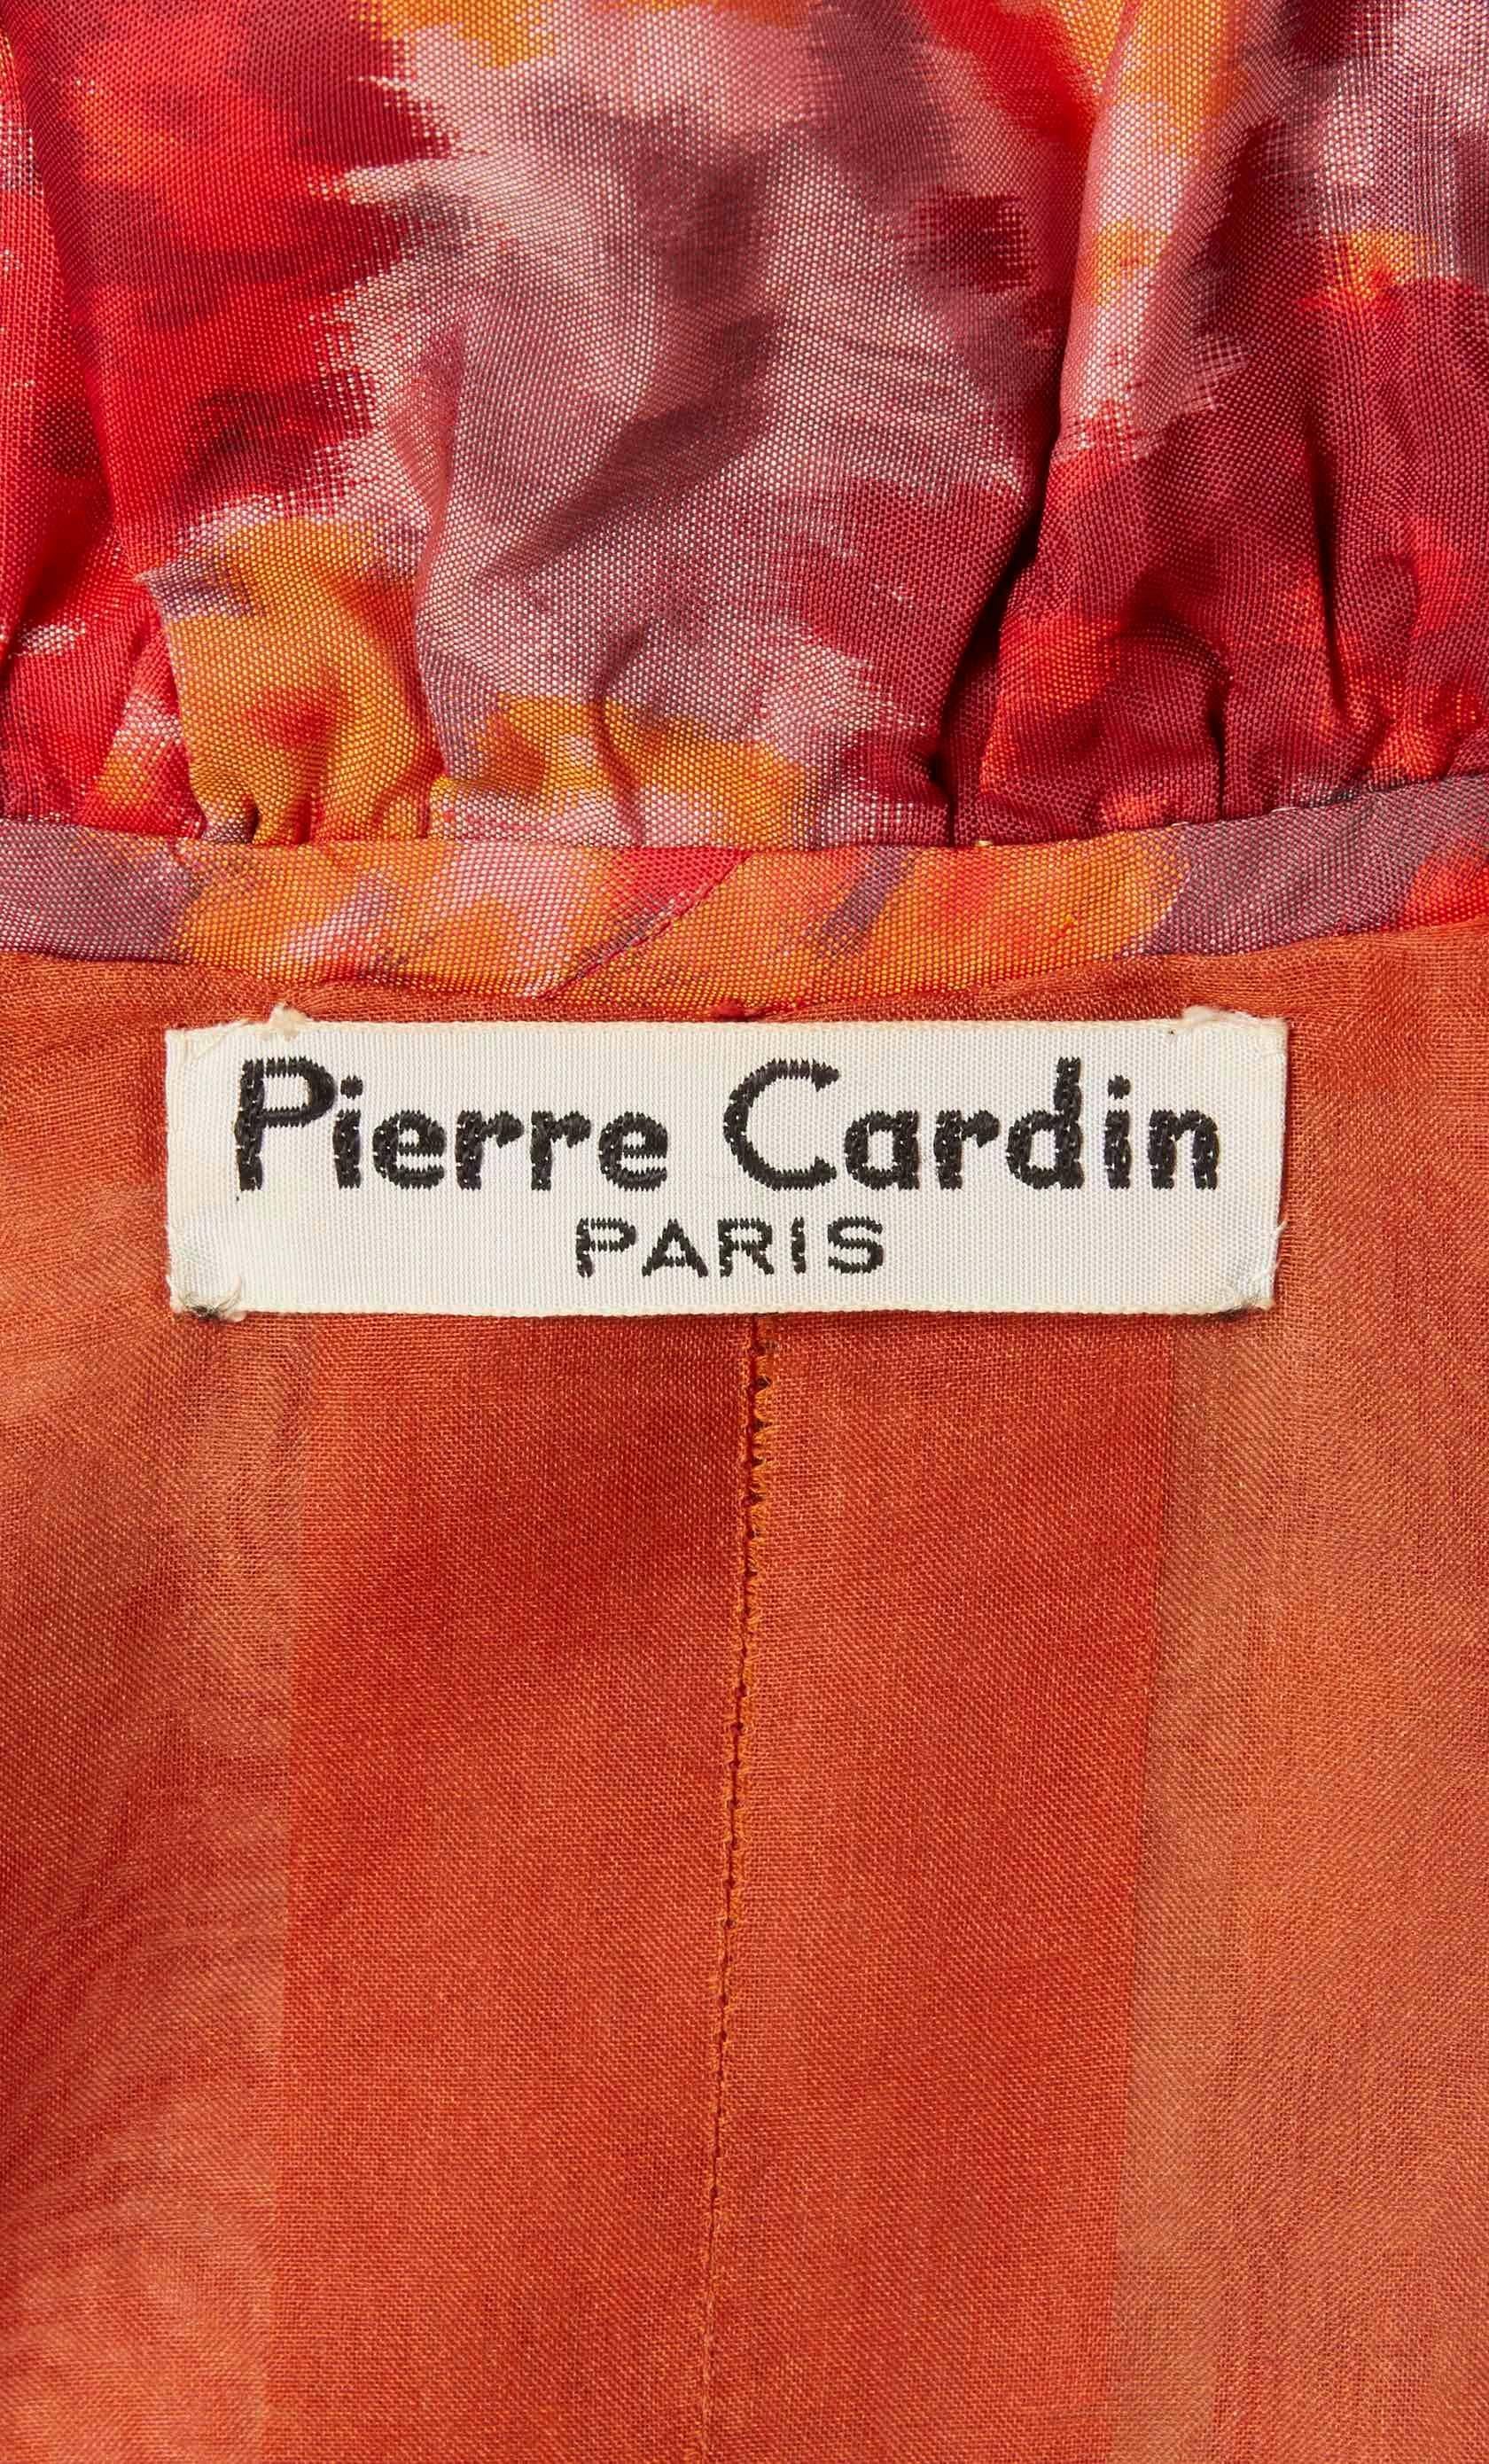 Pierre Cardin, printed Opera Coat, Circa 1950  For Sale 1